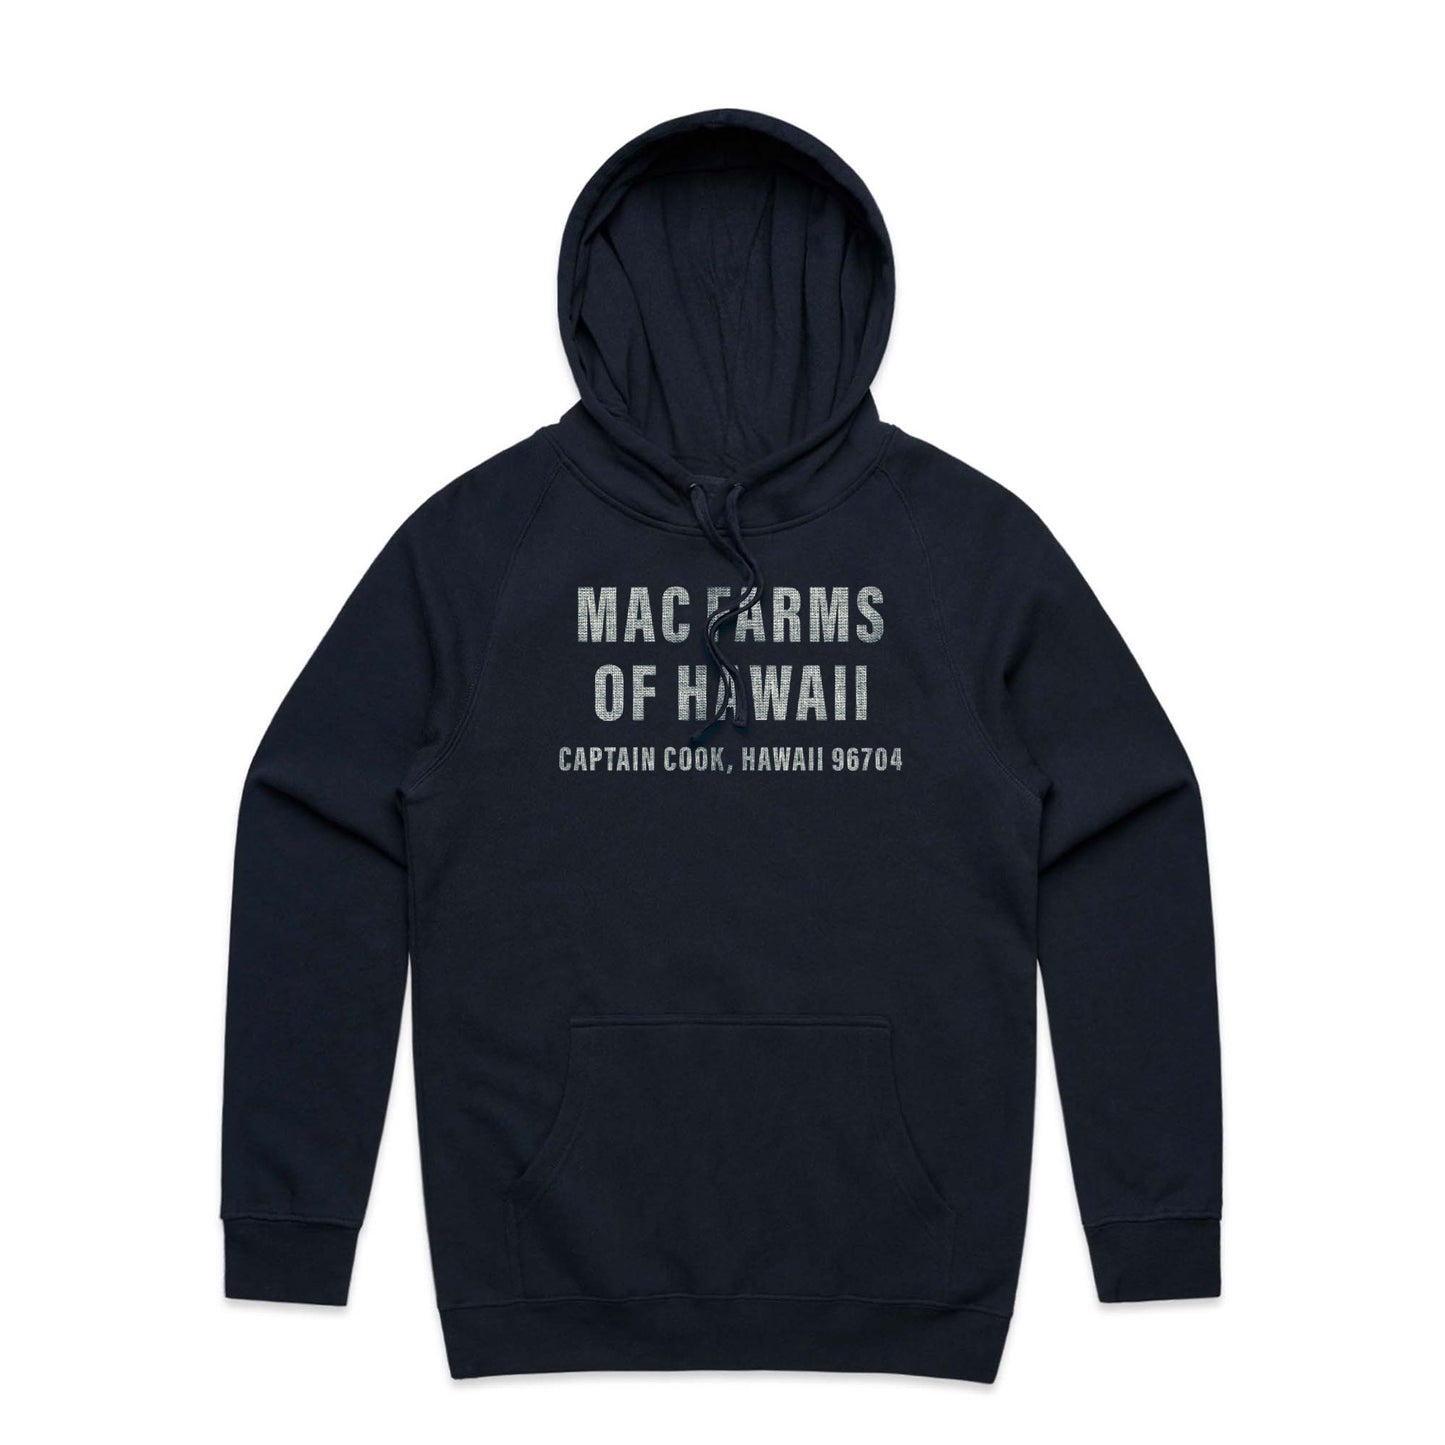 MacFarms Navy hoodie logo with burlap texture